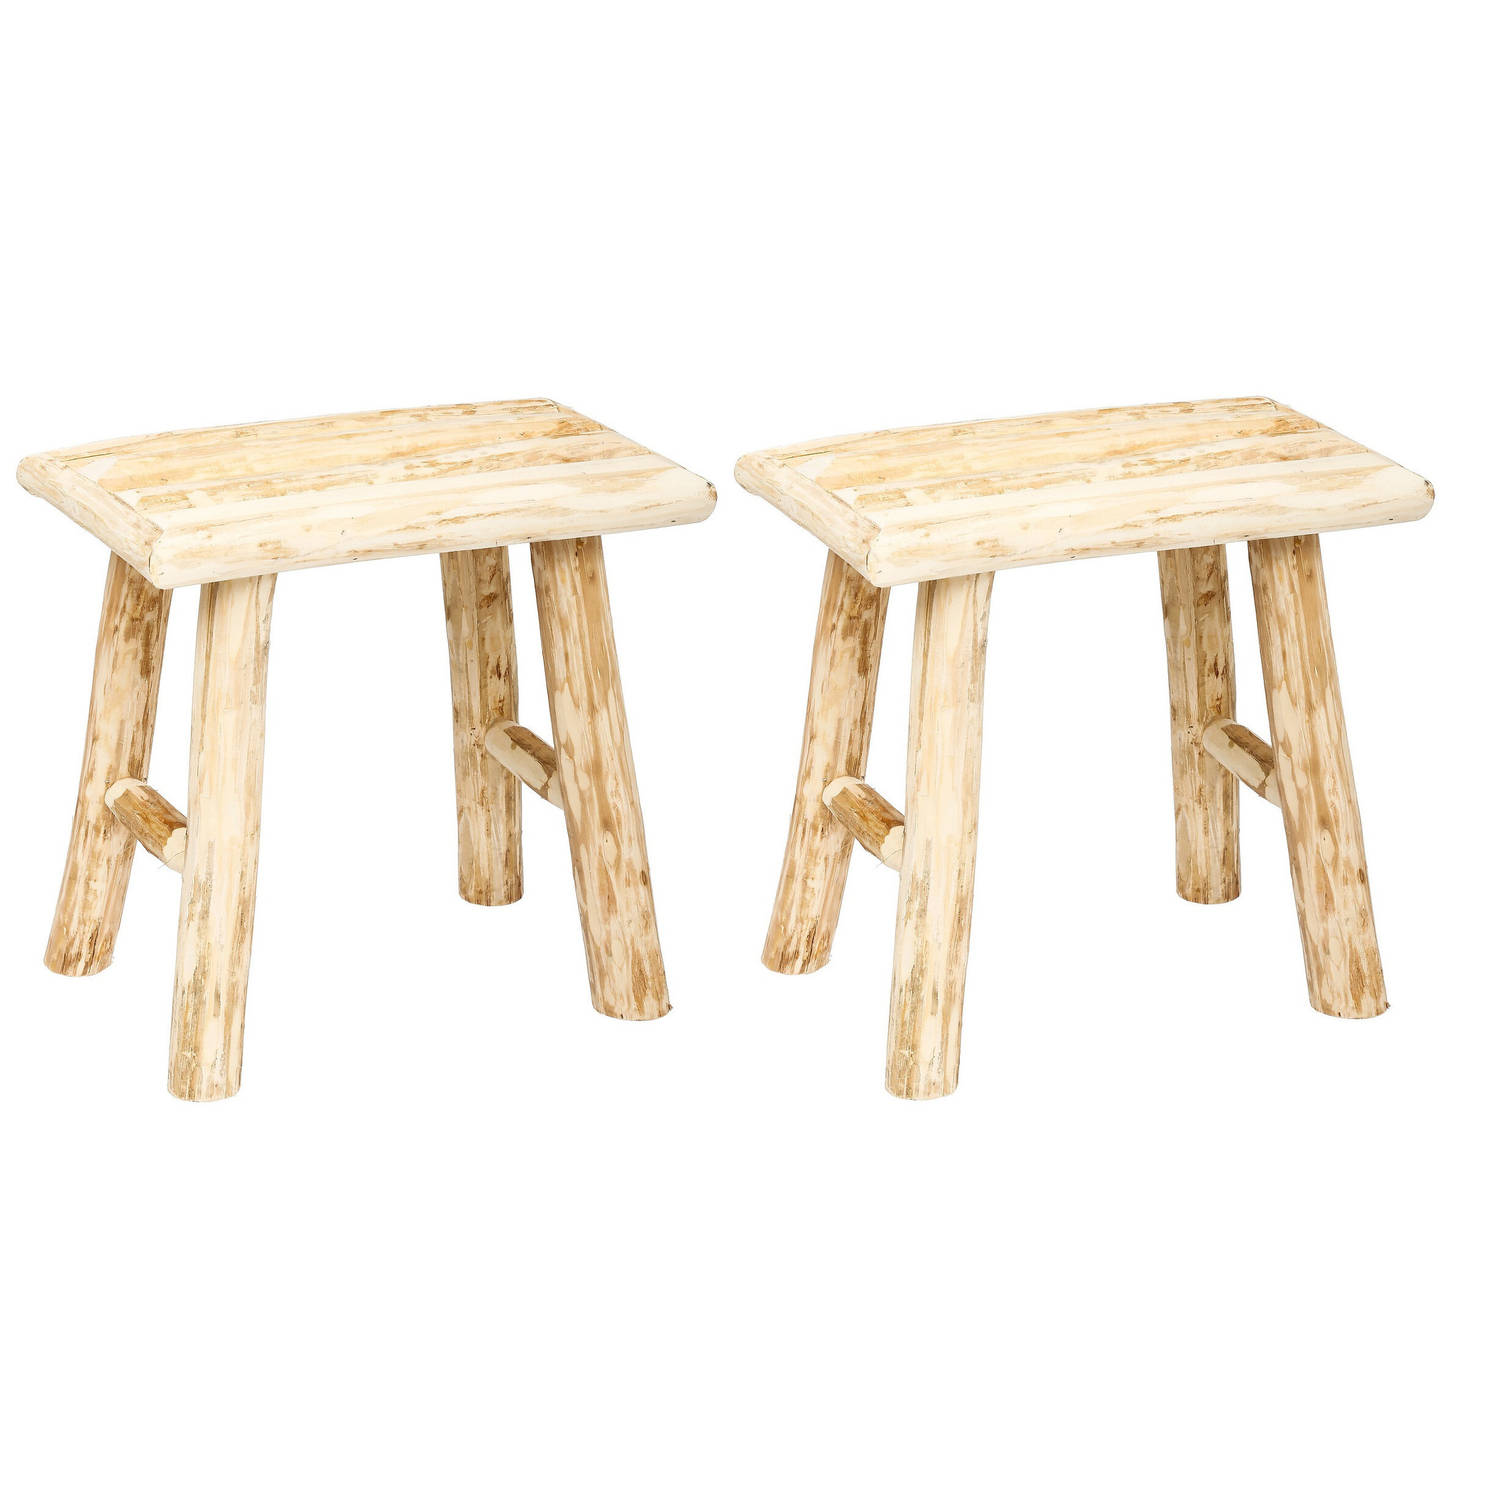 Atmosphera Zit krukje-bijzet stoel 2x hout houtskleur L23 x B34 x H31 cm Krukjes